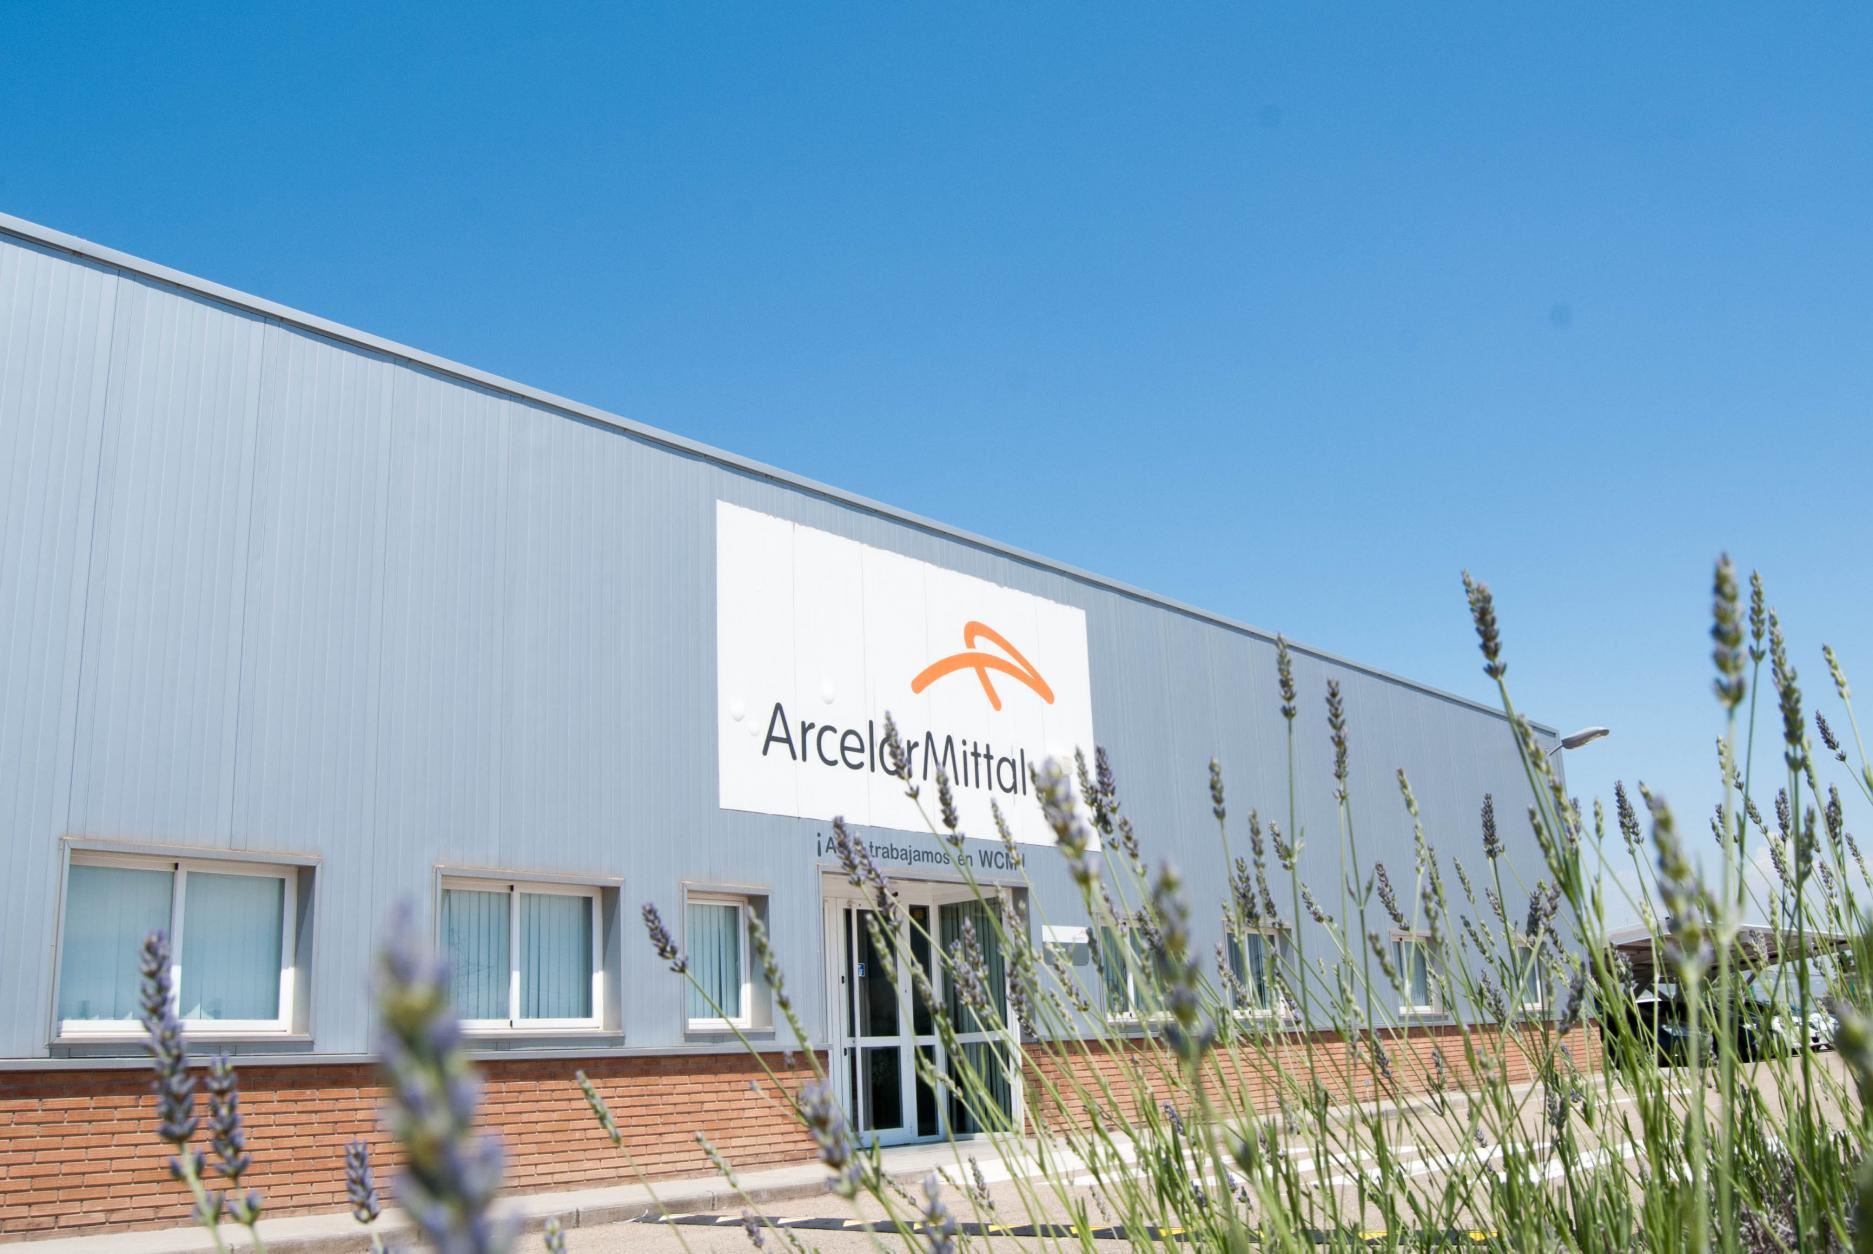 ArcelorMittal Zaragoza plant receives ResponsibleSteel certification